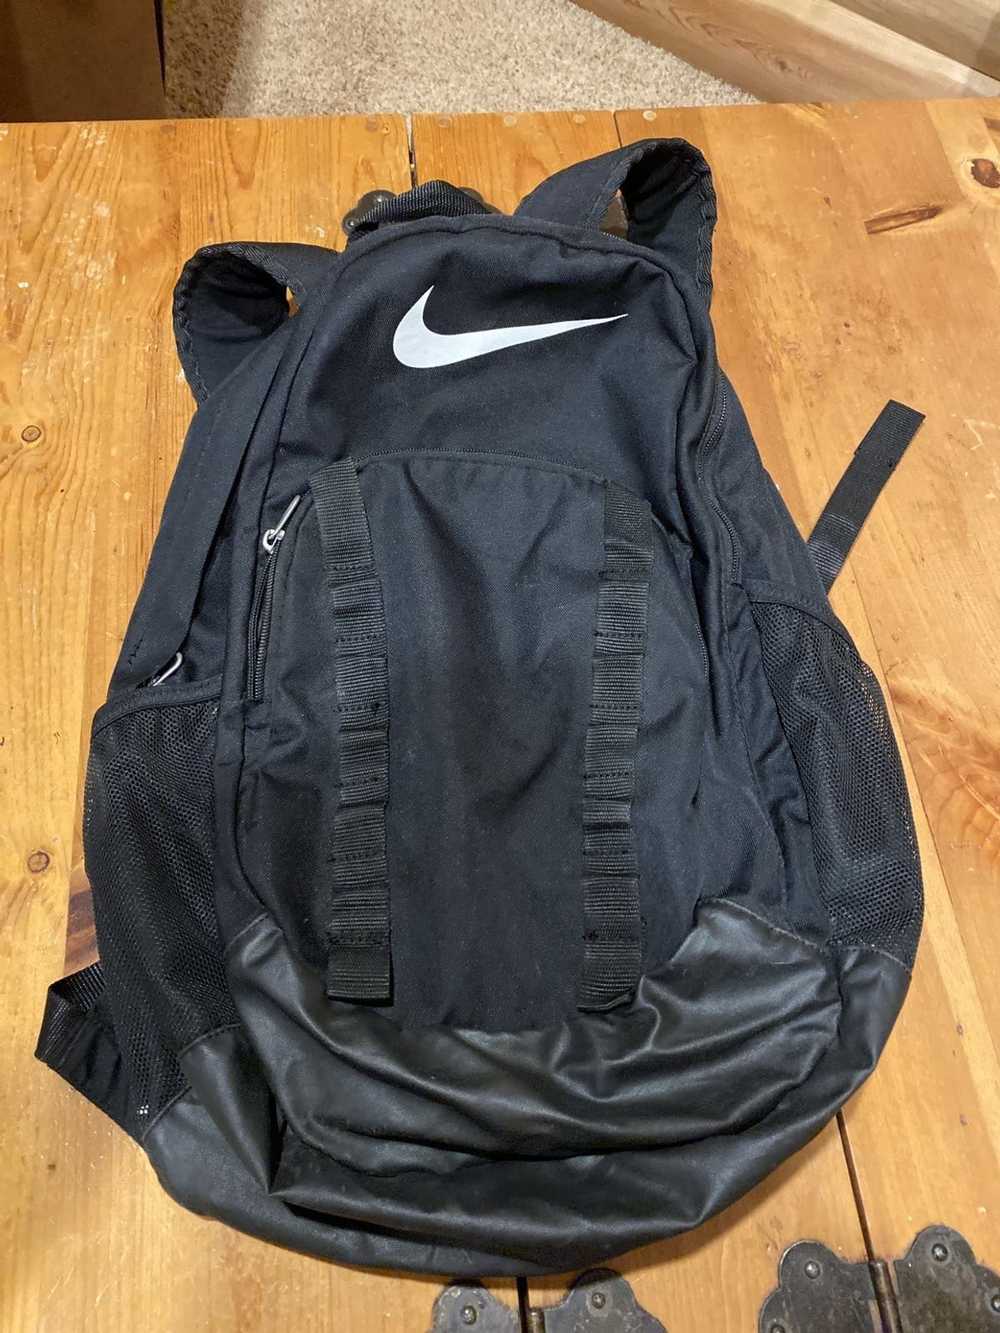 Nike Nike basketball backpack black - image 1